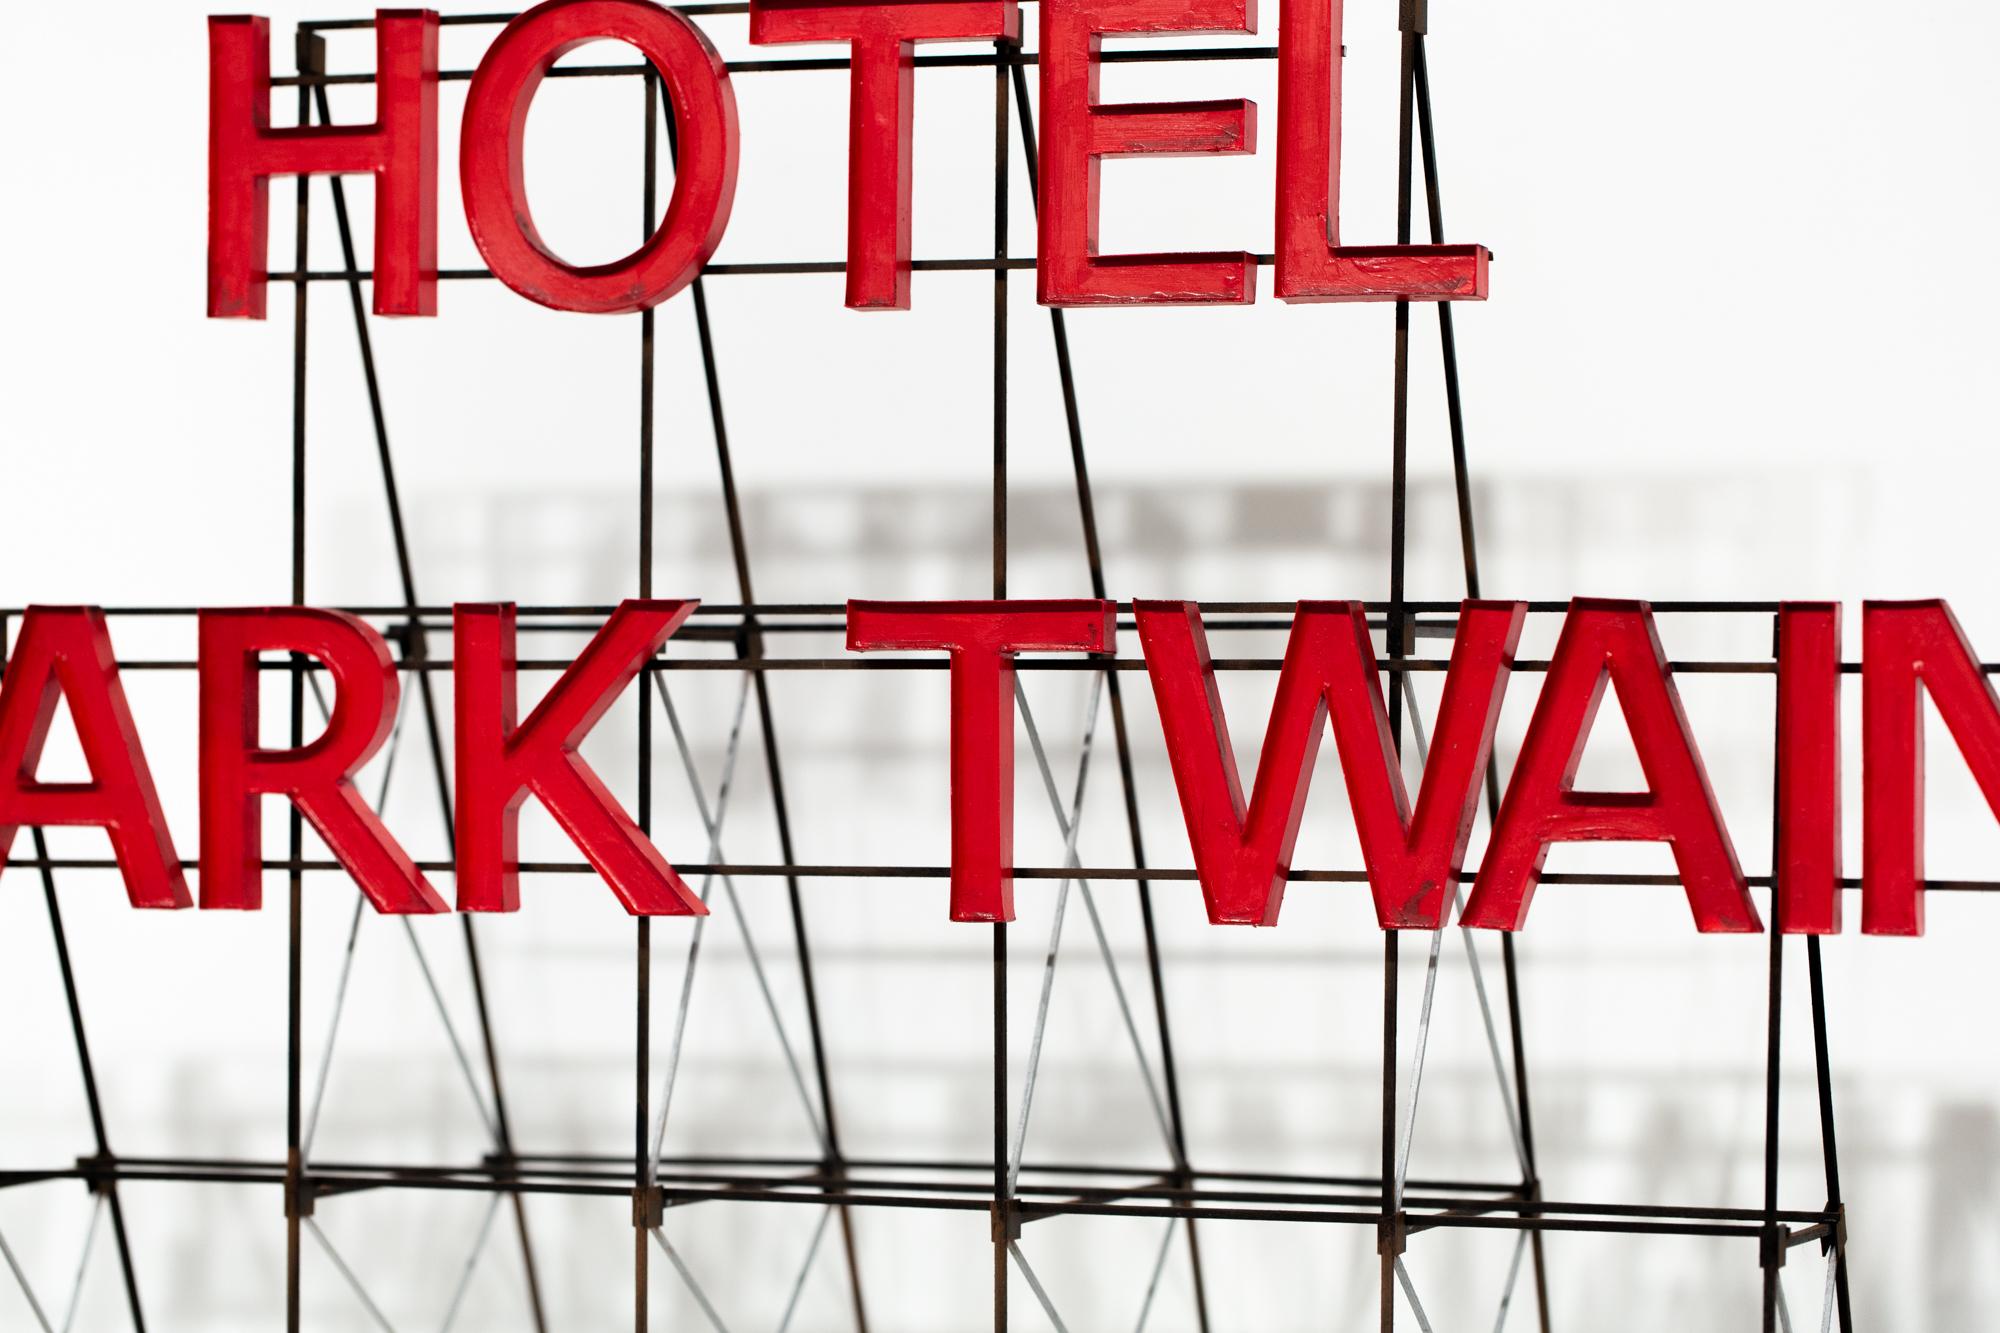 Hotel Mark Twain Sign - Sculpture by Drew Leshko